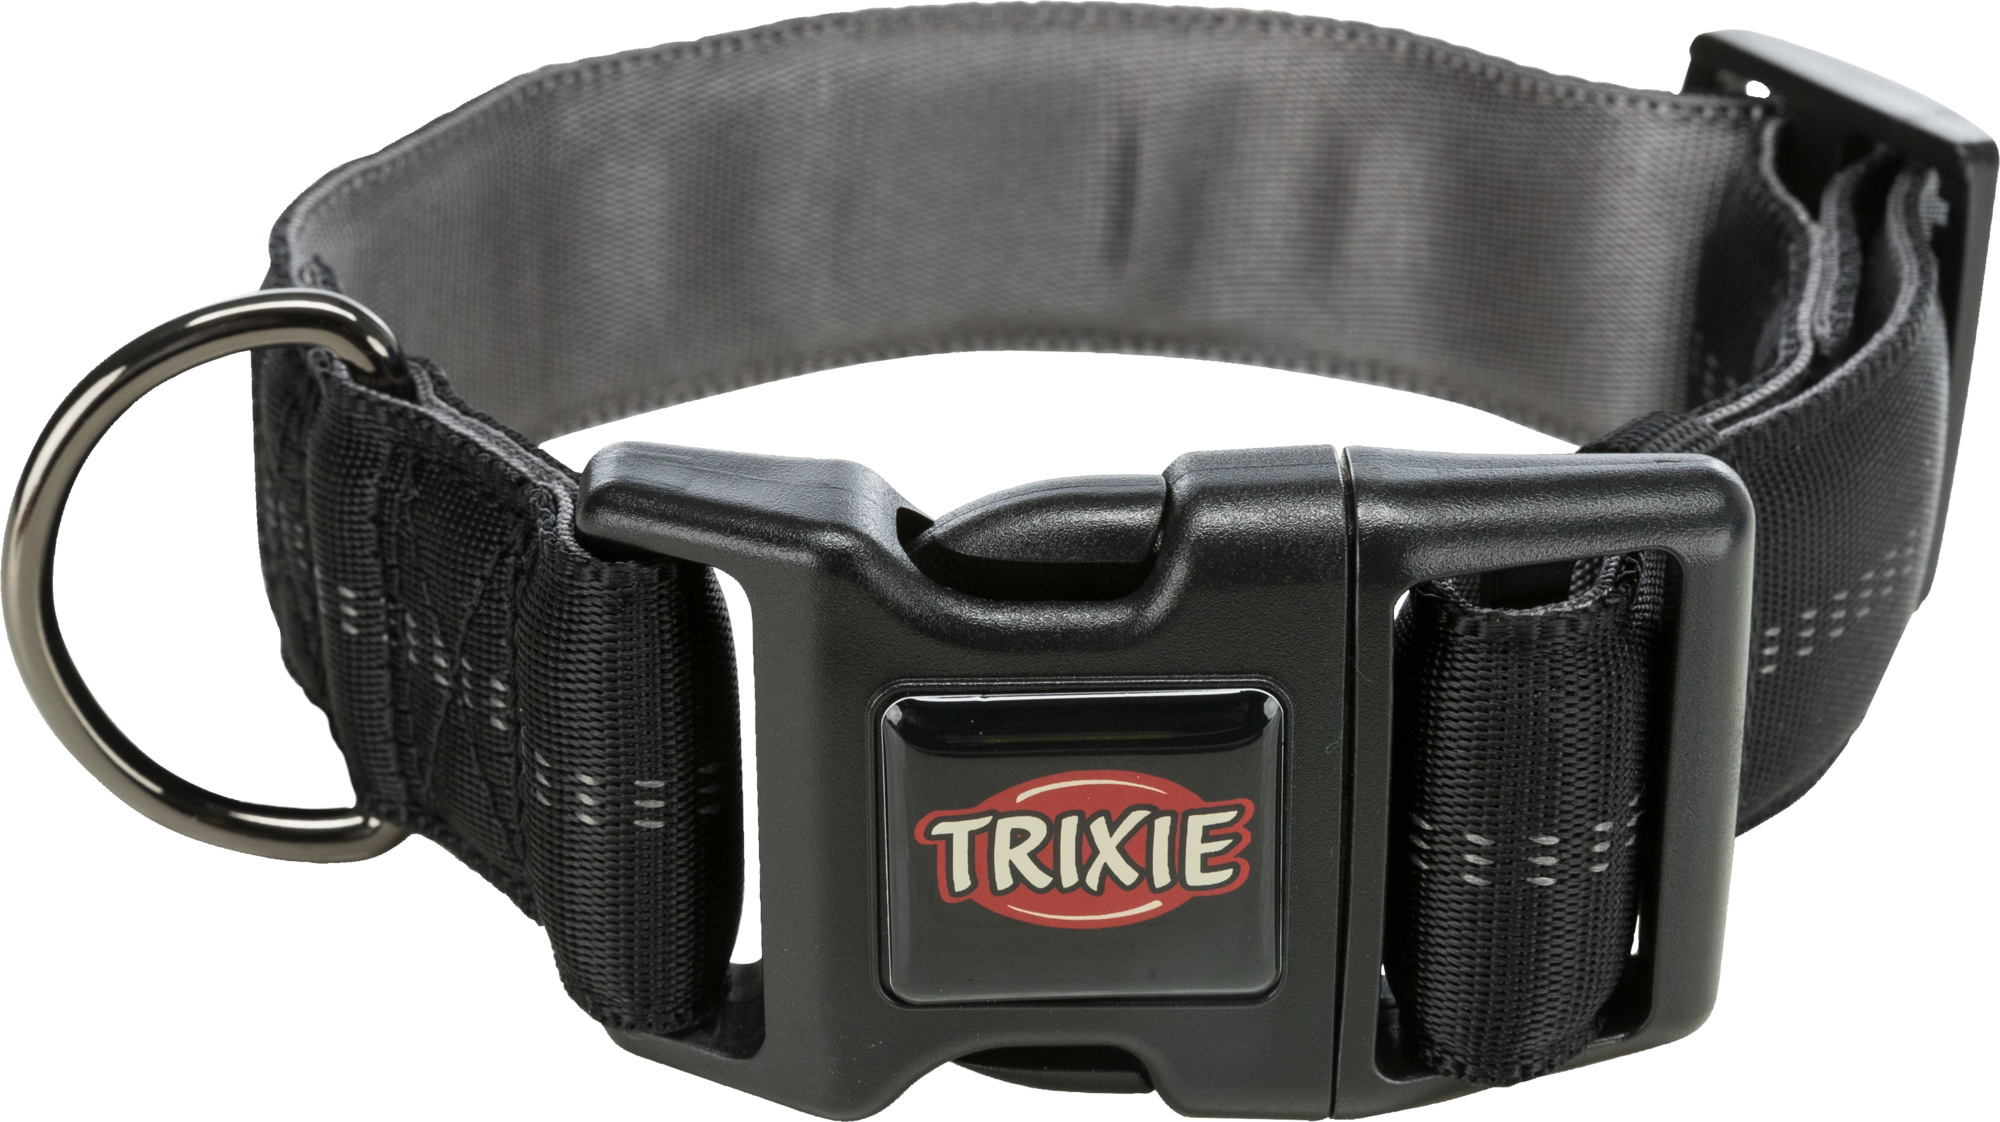 TRIXIE Softline Elegance Halsband, extra breit TRIXIE Softline Elegance Halsband, extra breit, S–M: 32–45 cm/38 mm, schwarz/grafit